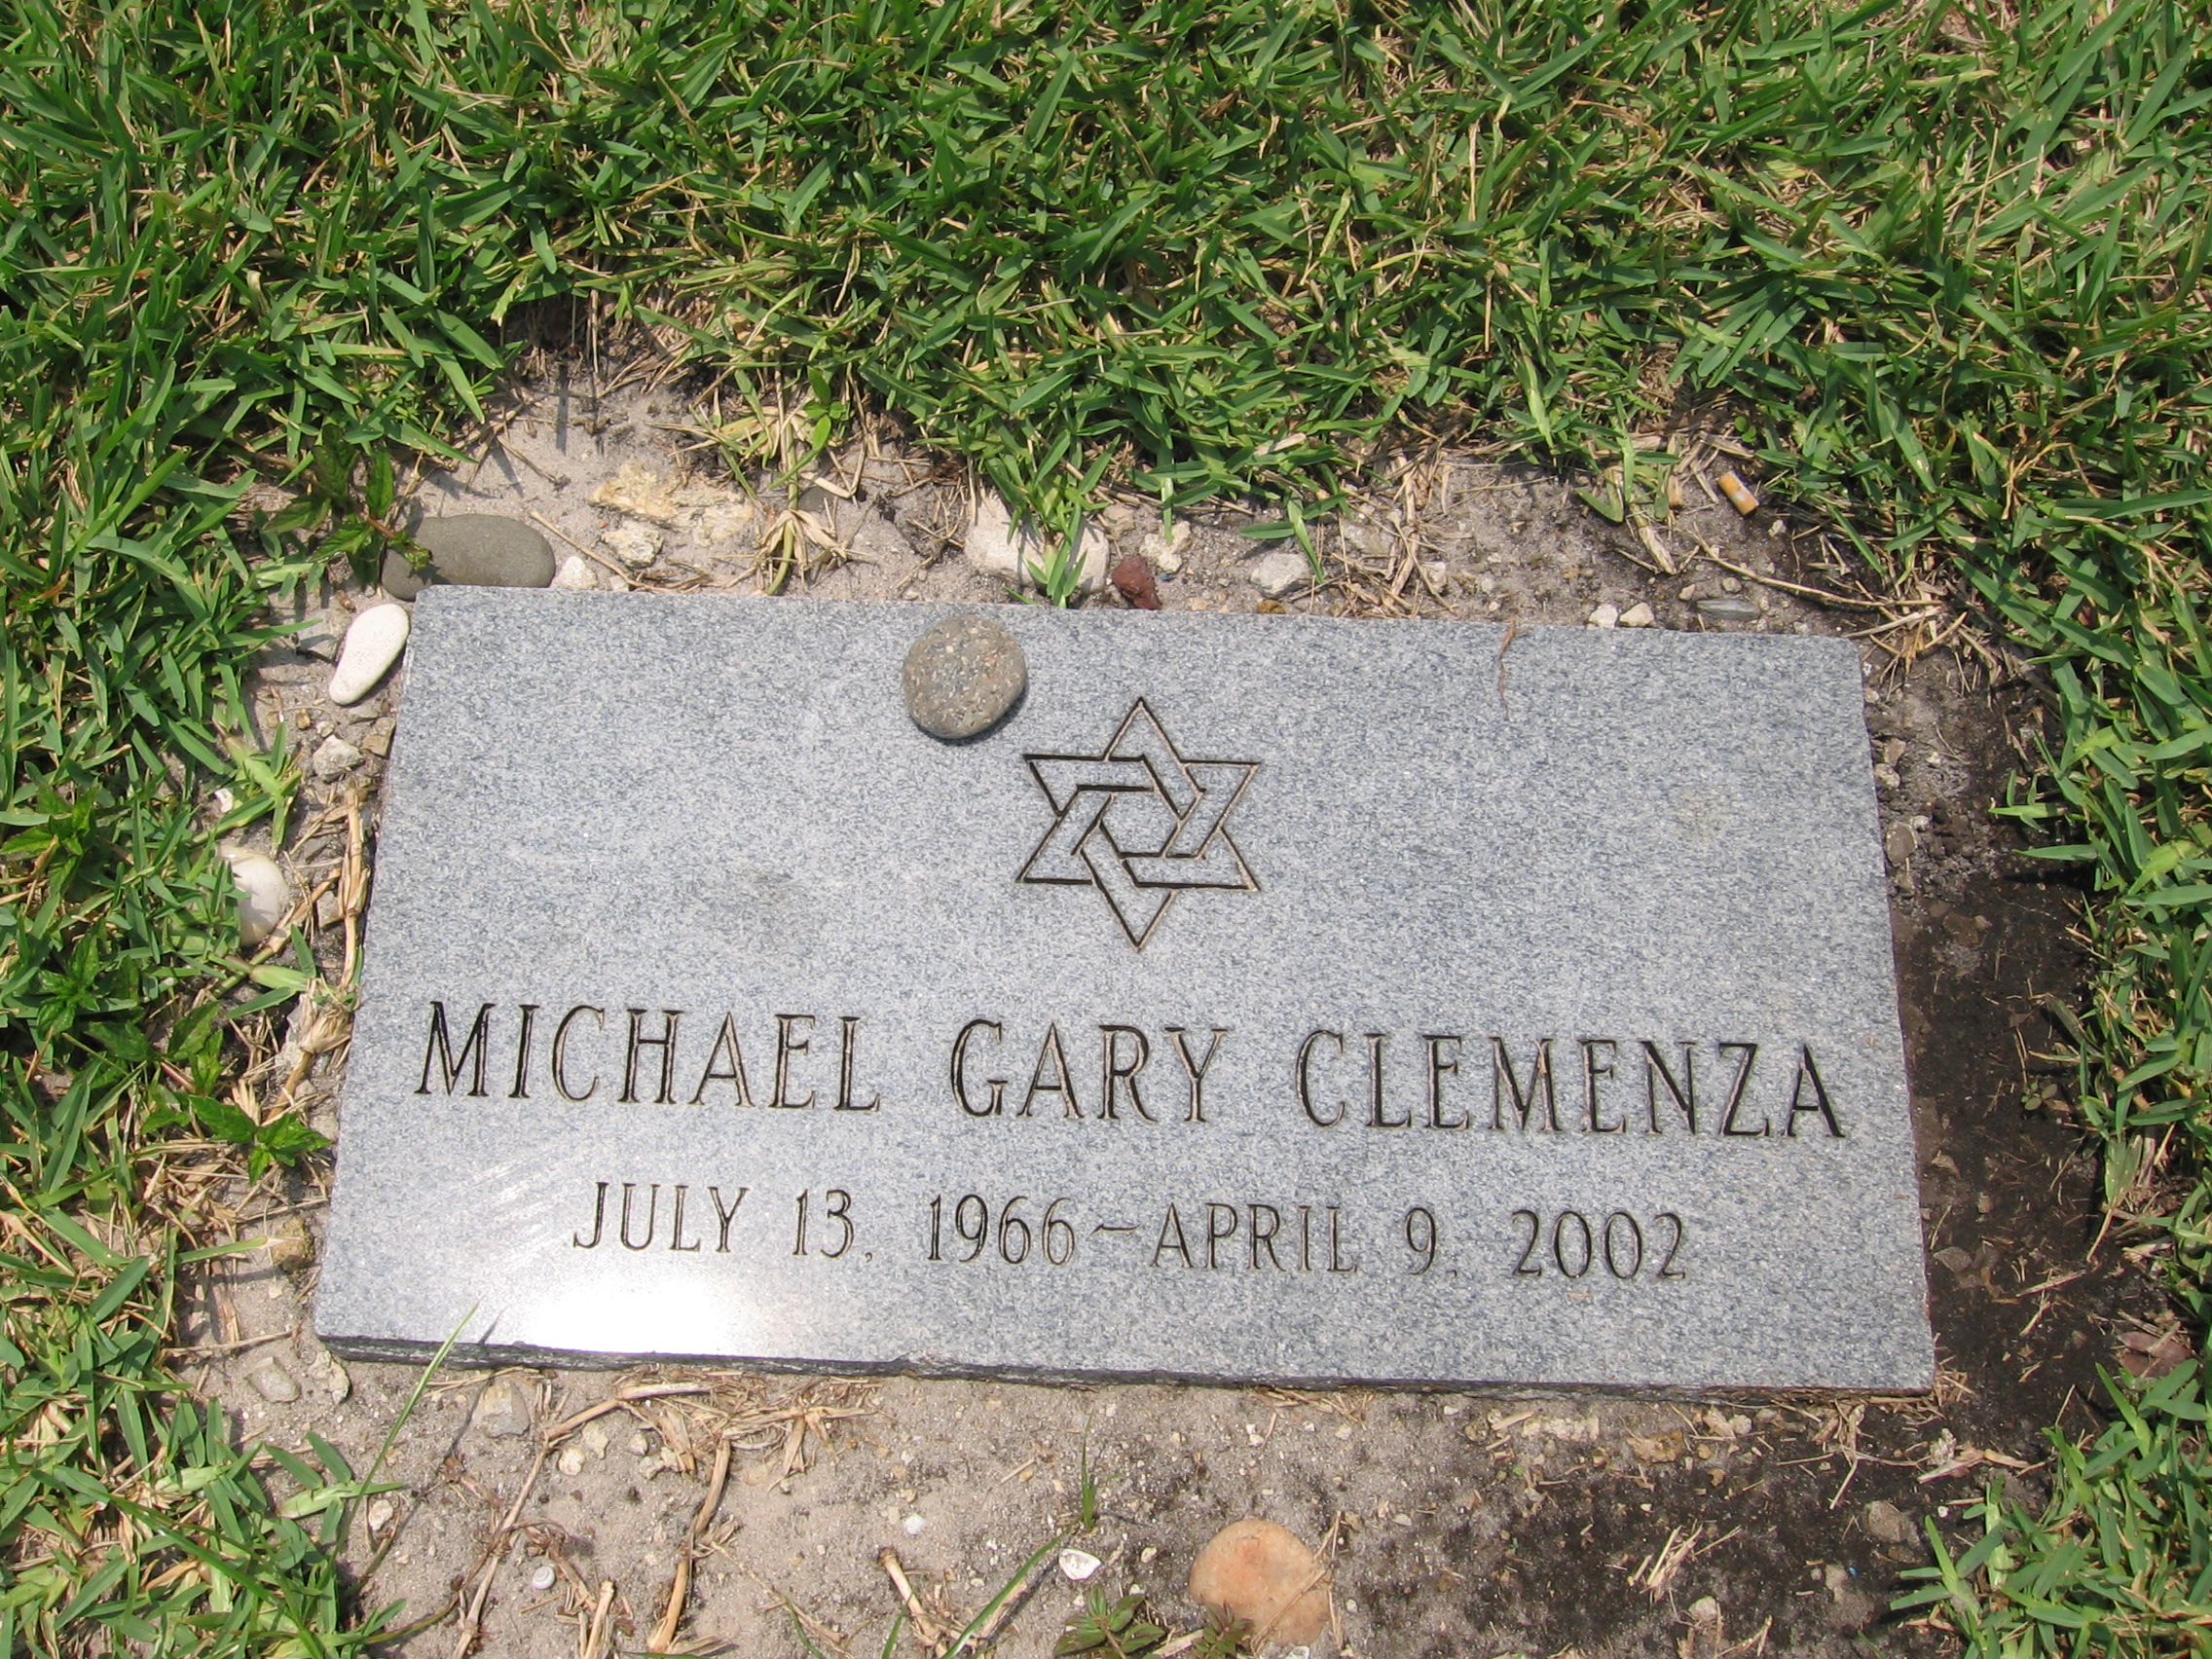 Michael Gary Clemenza